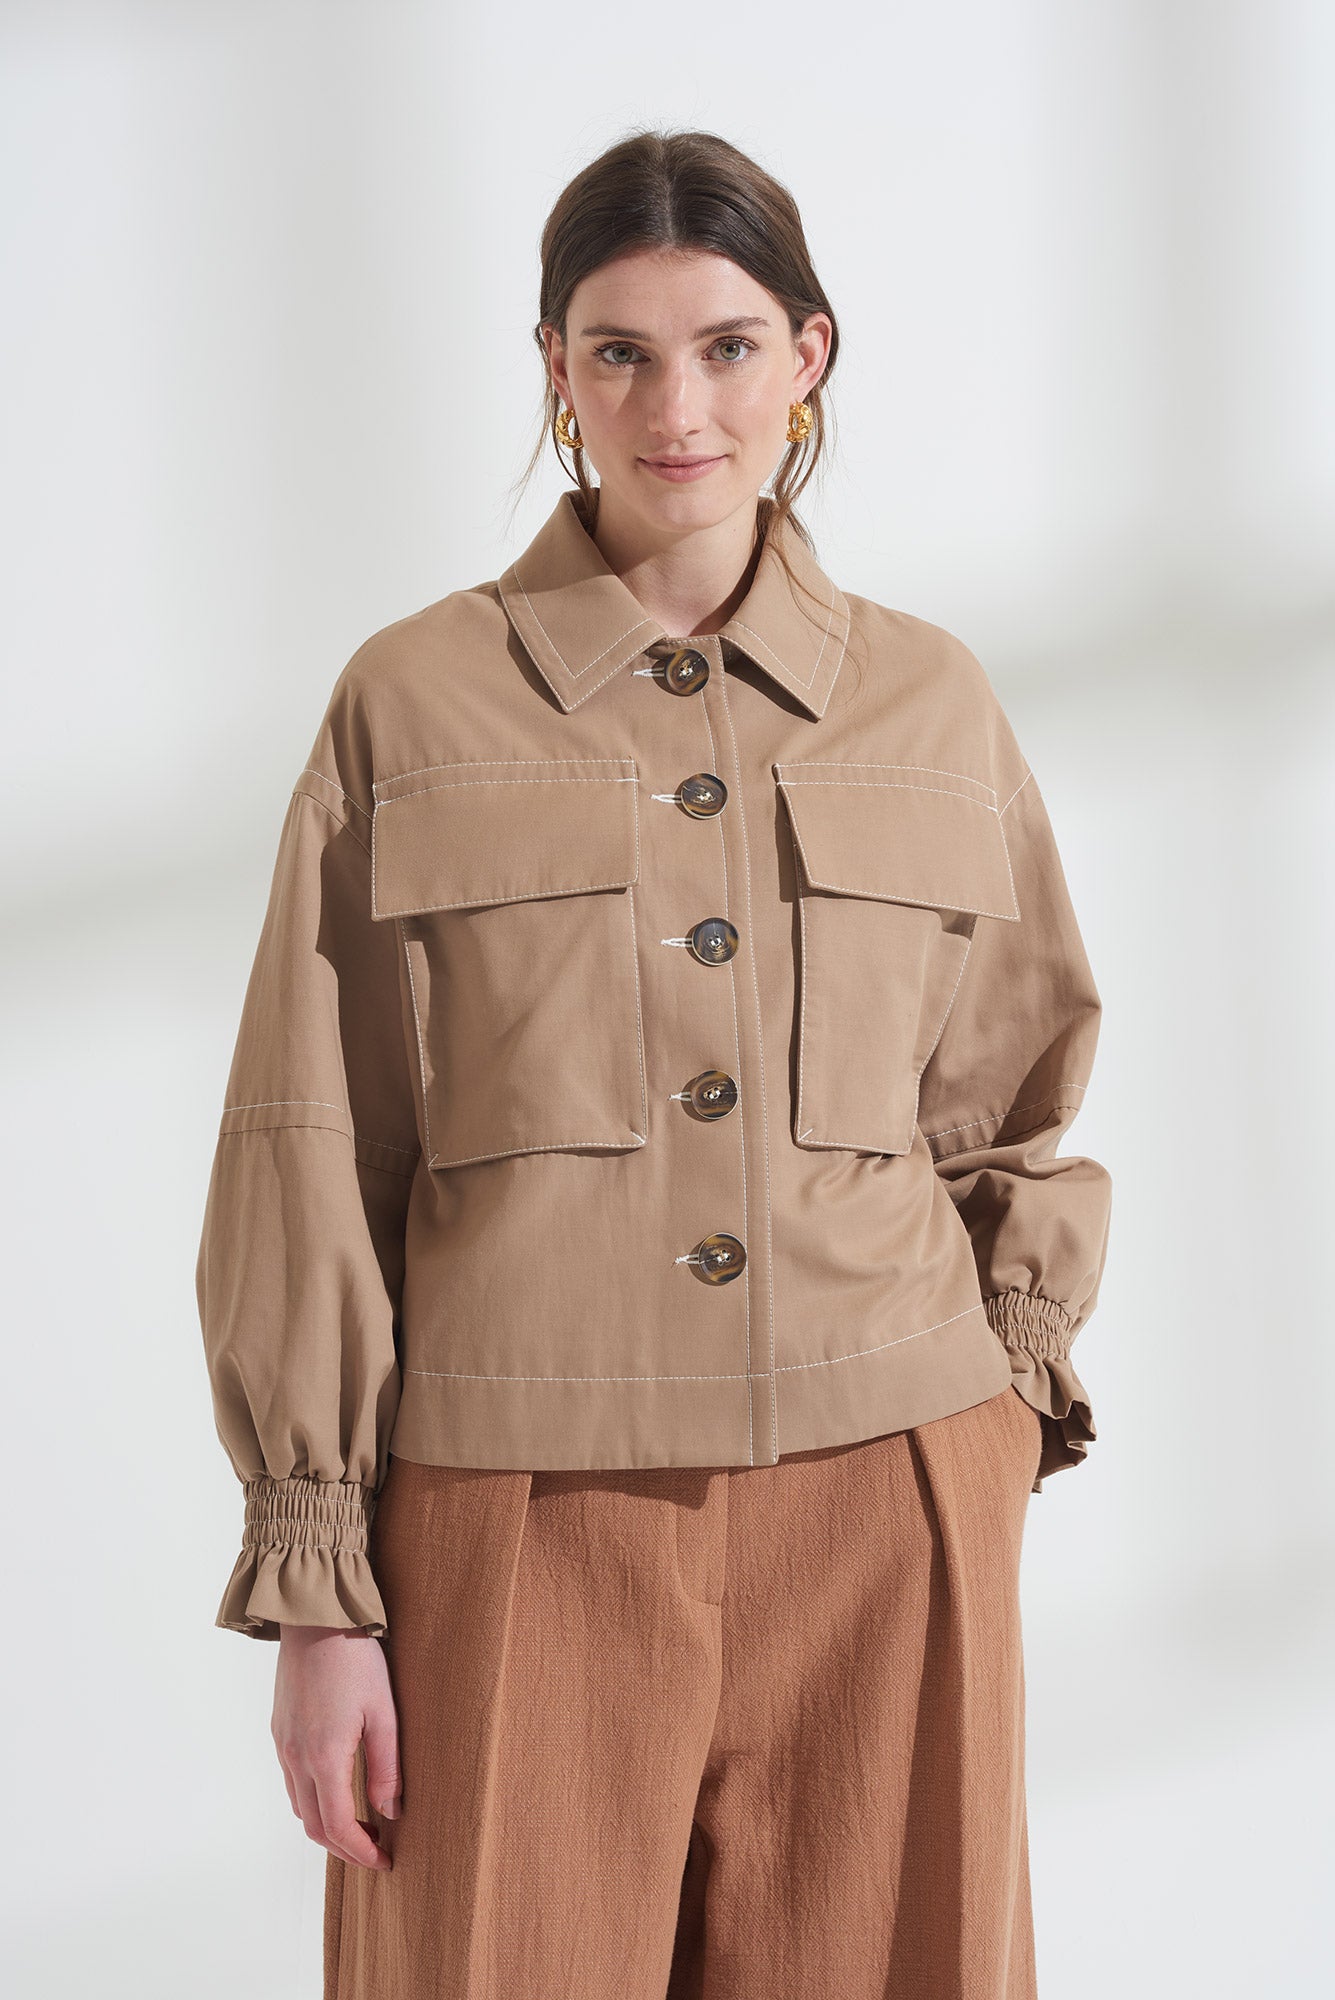 Designer Women's Oversized Frill Cuff Jacket from Palones